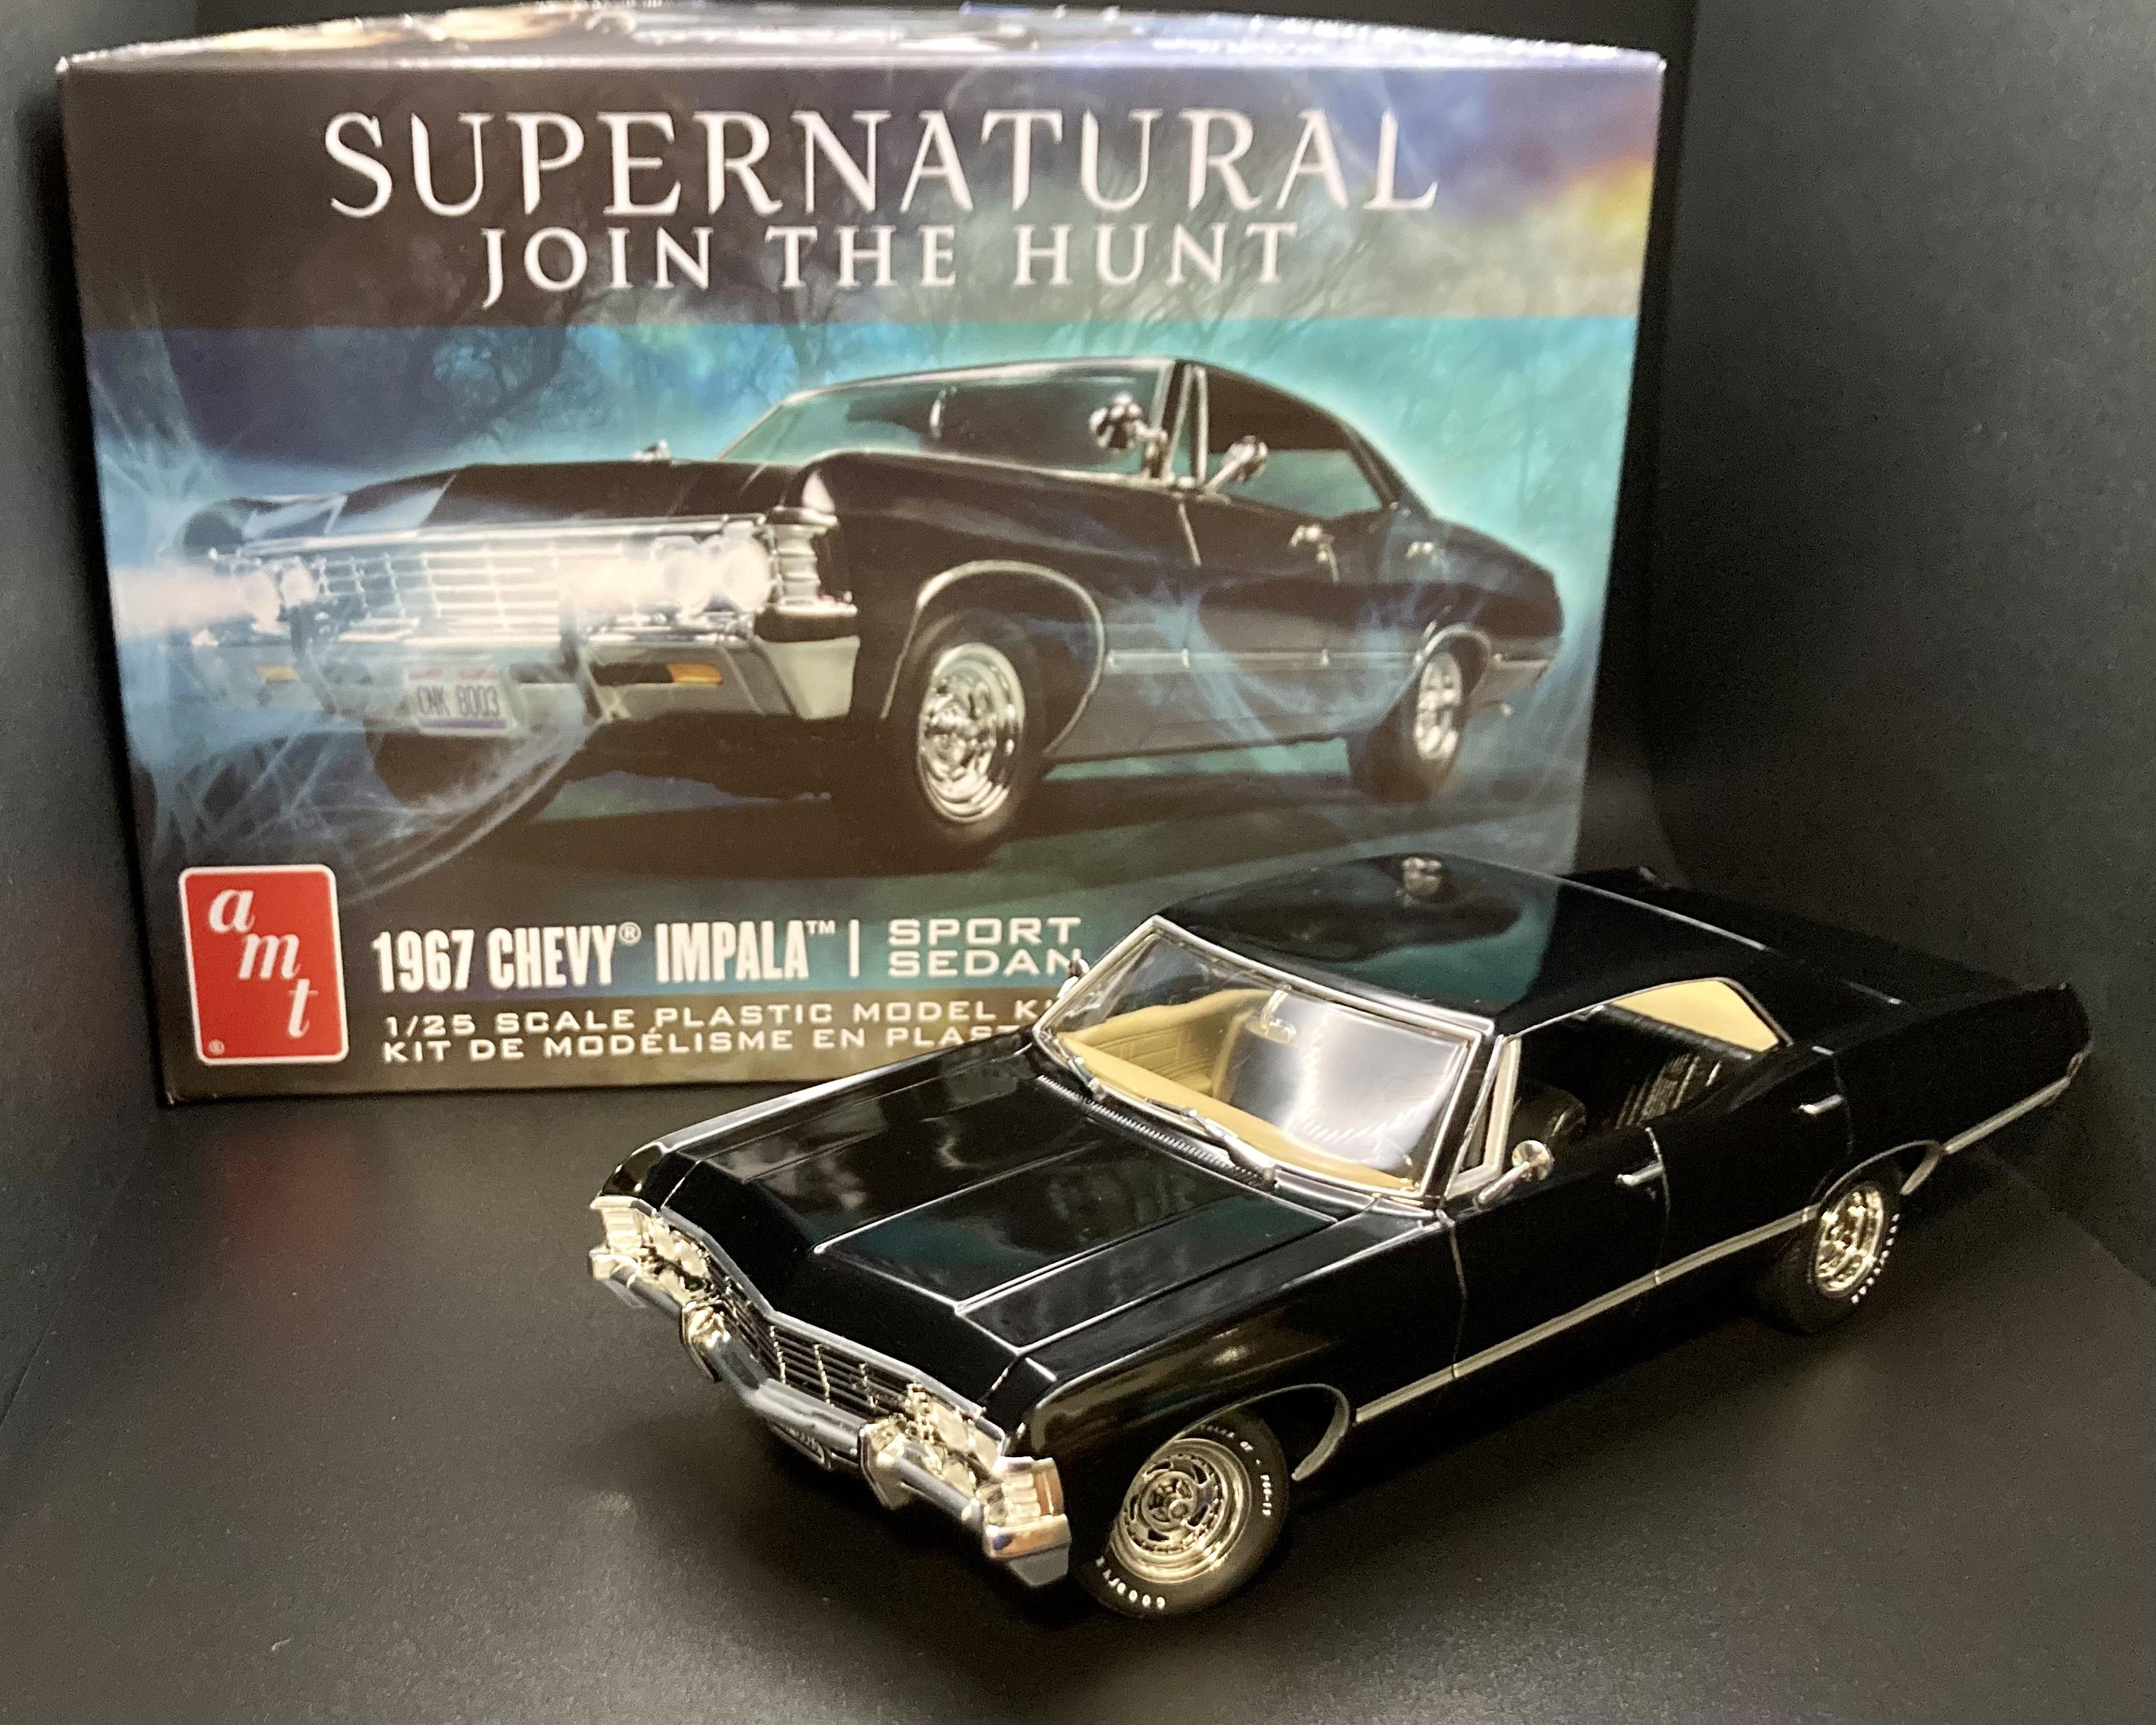 1967 Chevy Impala Sedan from “Supernatural” - Model Cars - Model